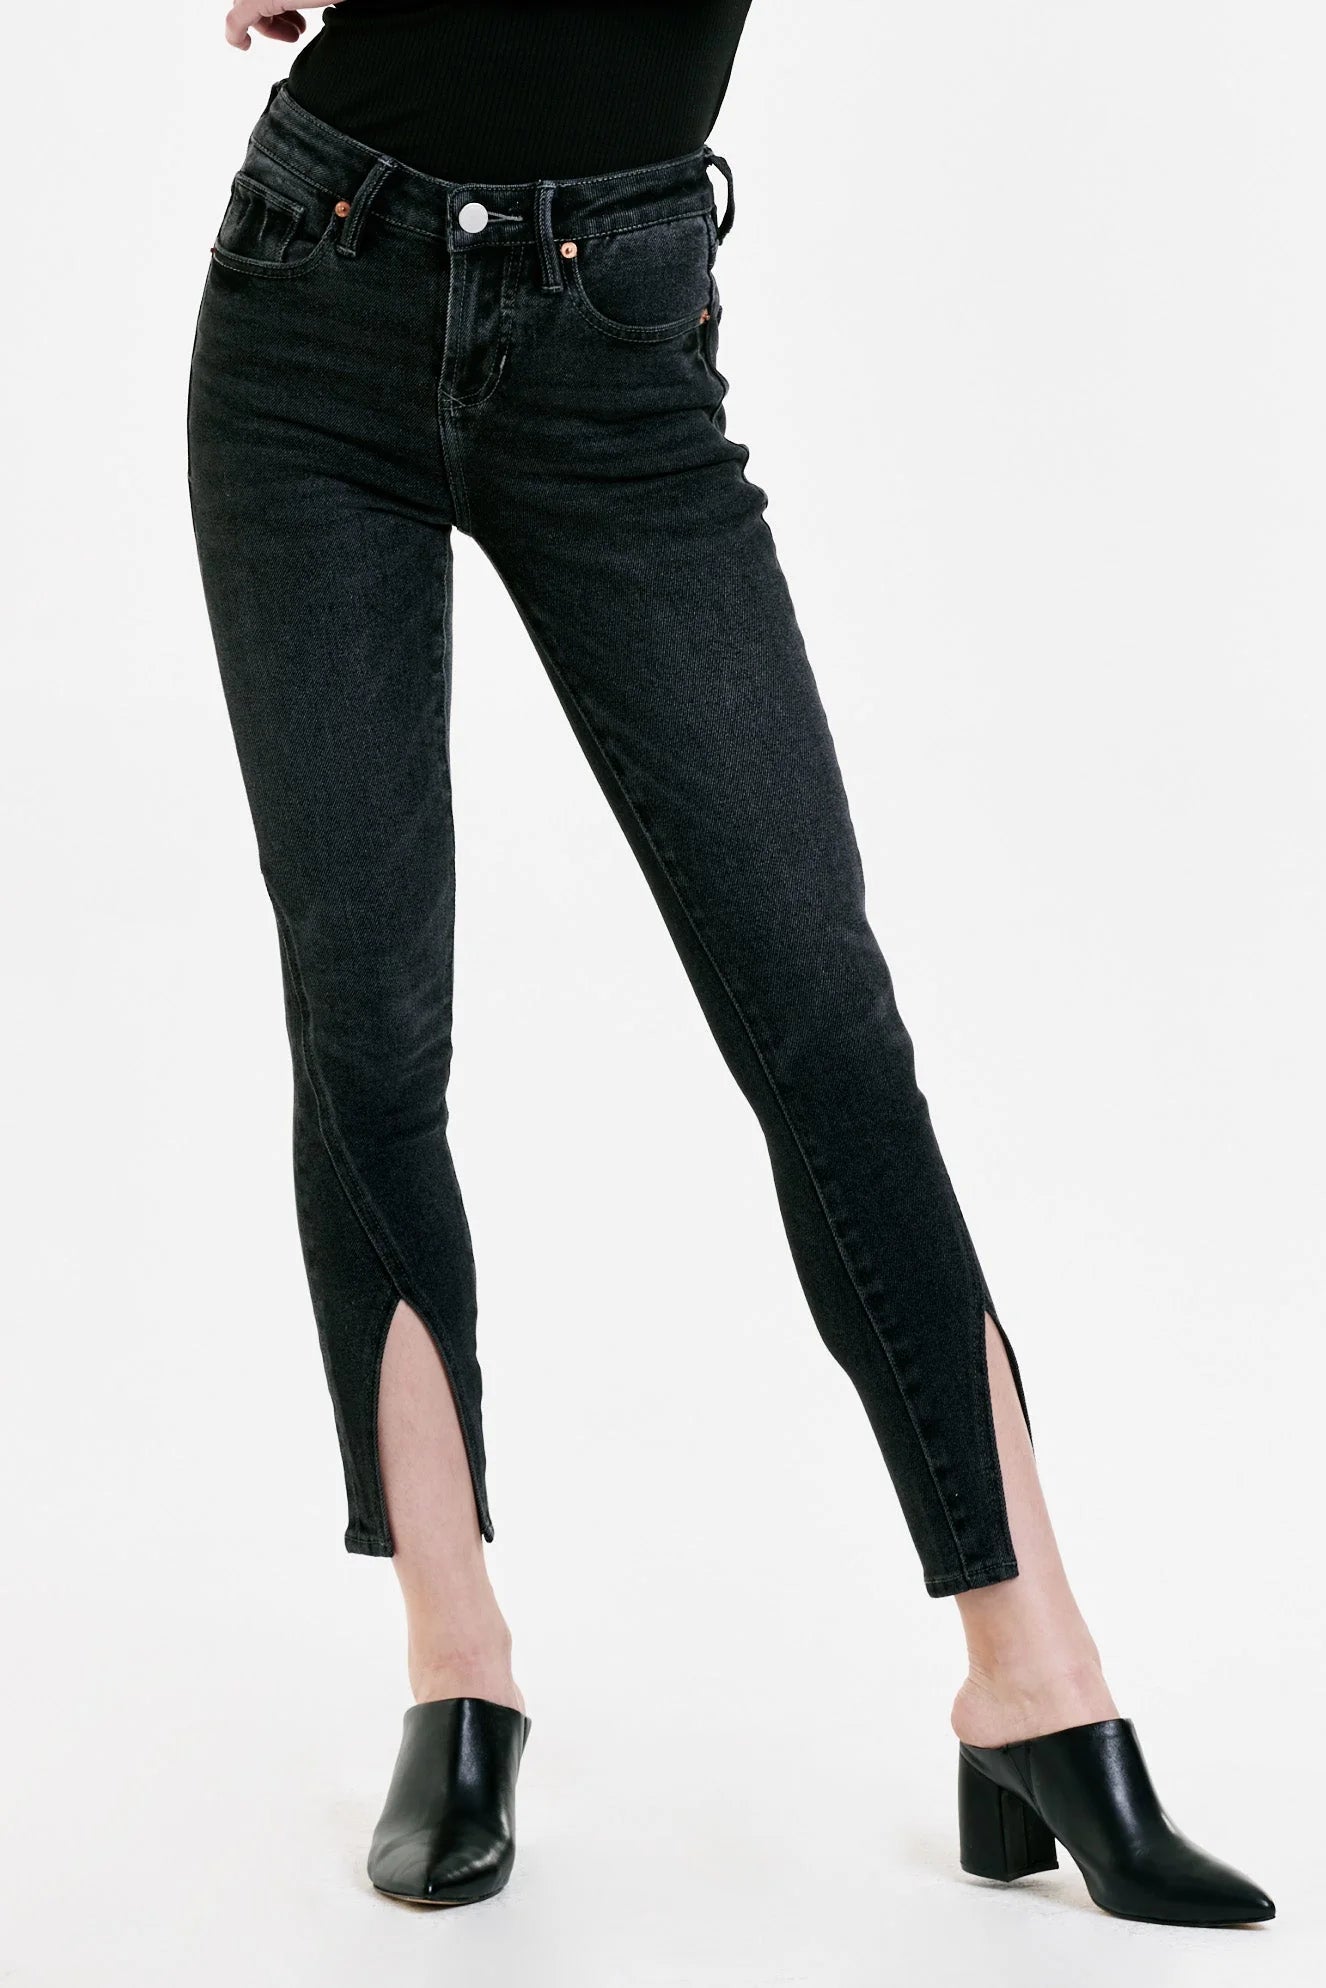 Kenwood Ember Jeans